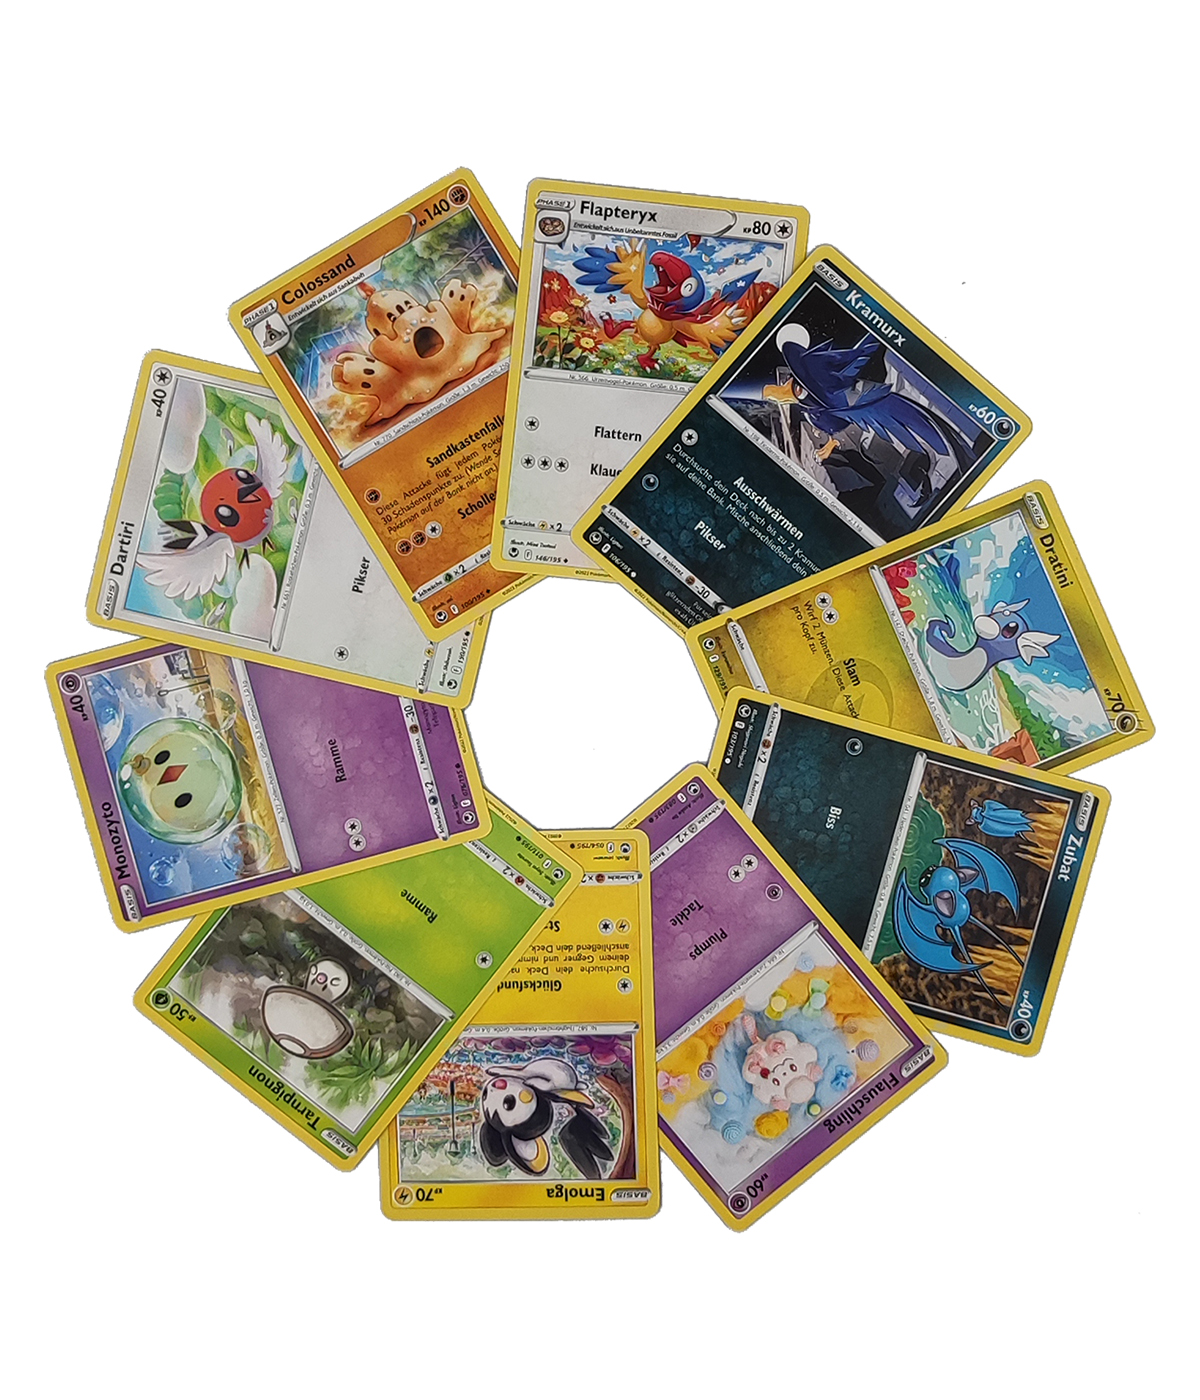 Pokémon 2er Mix-Bundle "Karmesin & Purpur + Silberne Sturmwinde" -  2 Displays mit je 18 Boosterpacks